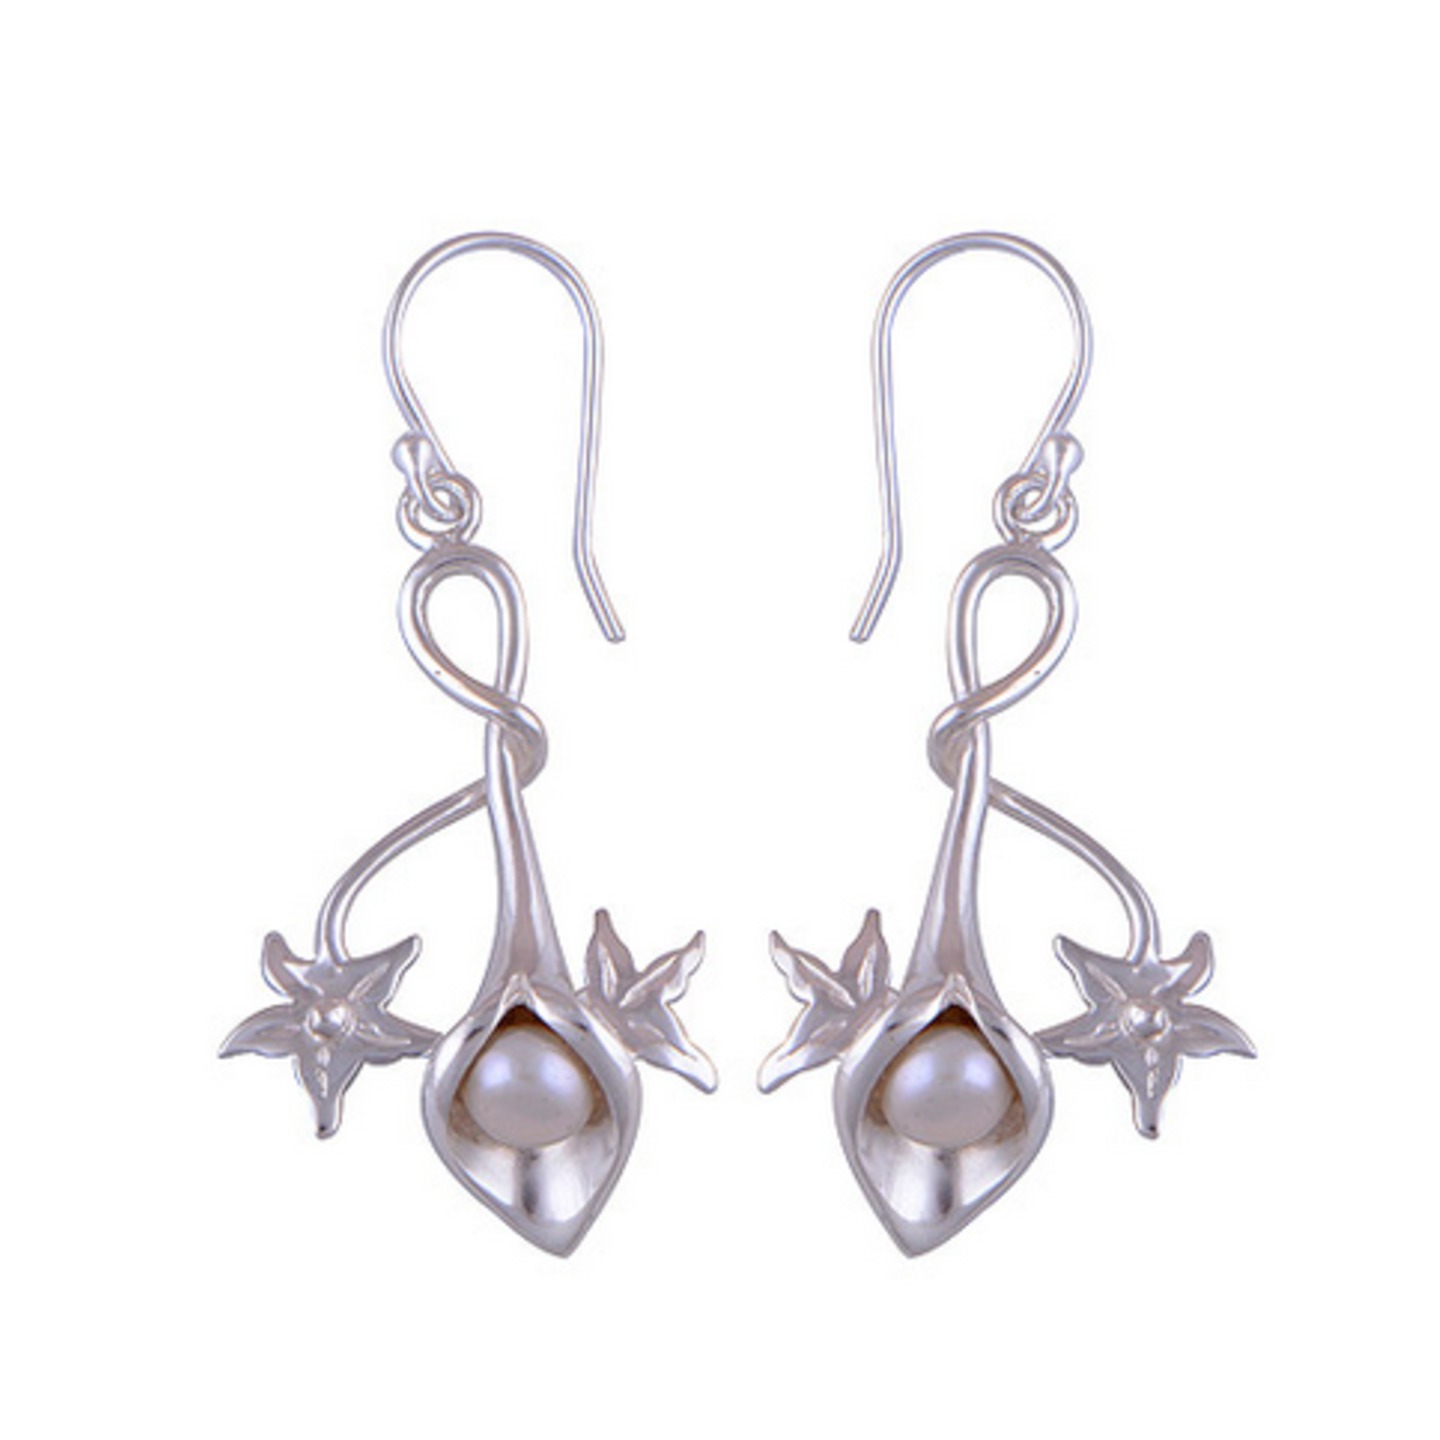 The Pearl Flower Silver Earring